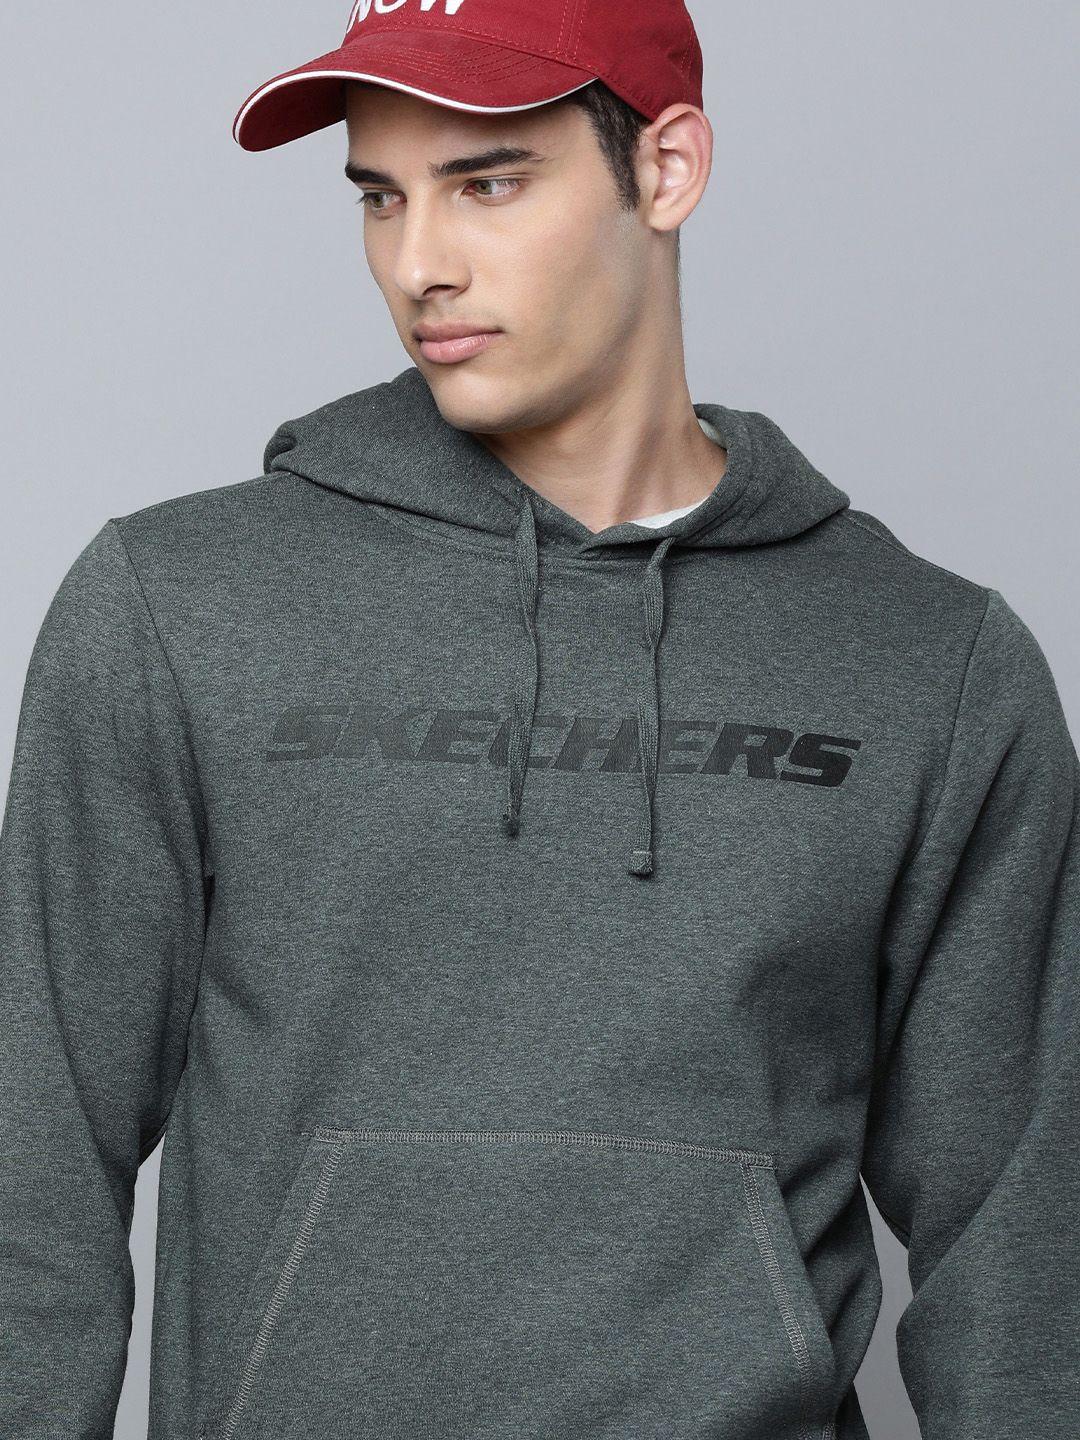 skechers-men-charcoal-grey-melange-brand-logo-print-heritage-ii-pullover-hooded-sweatshirt